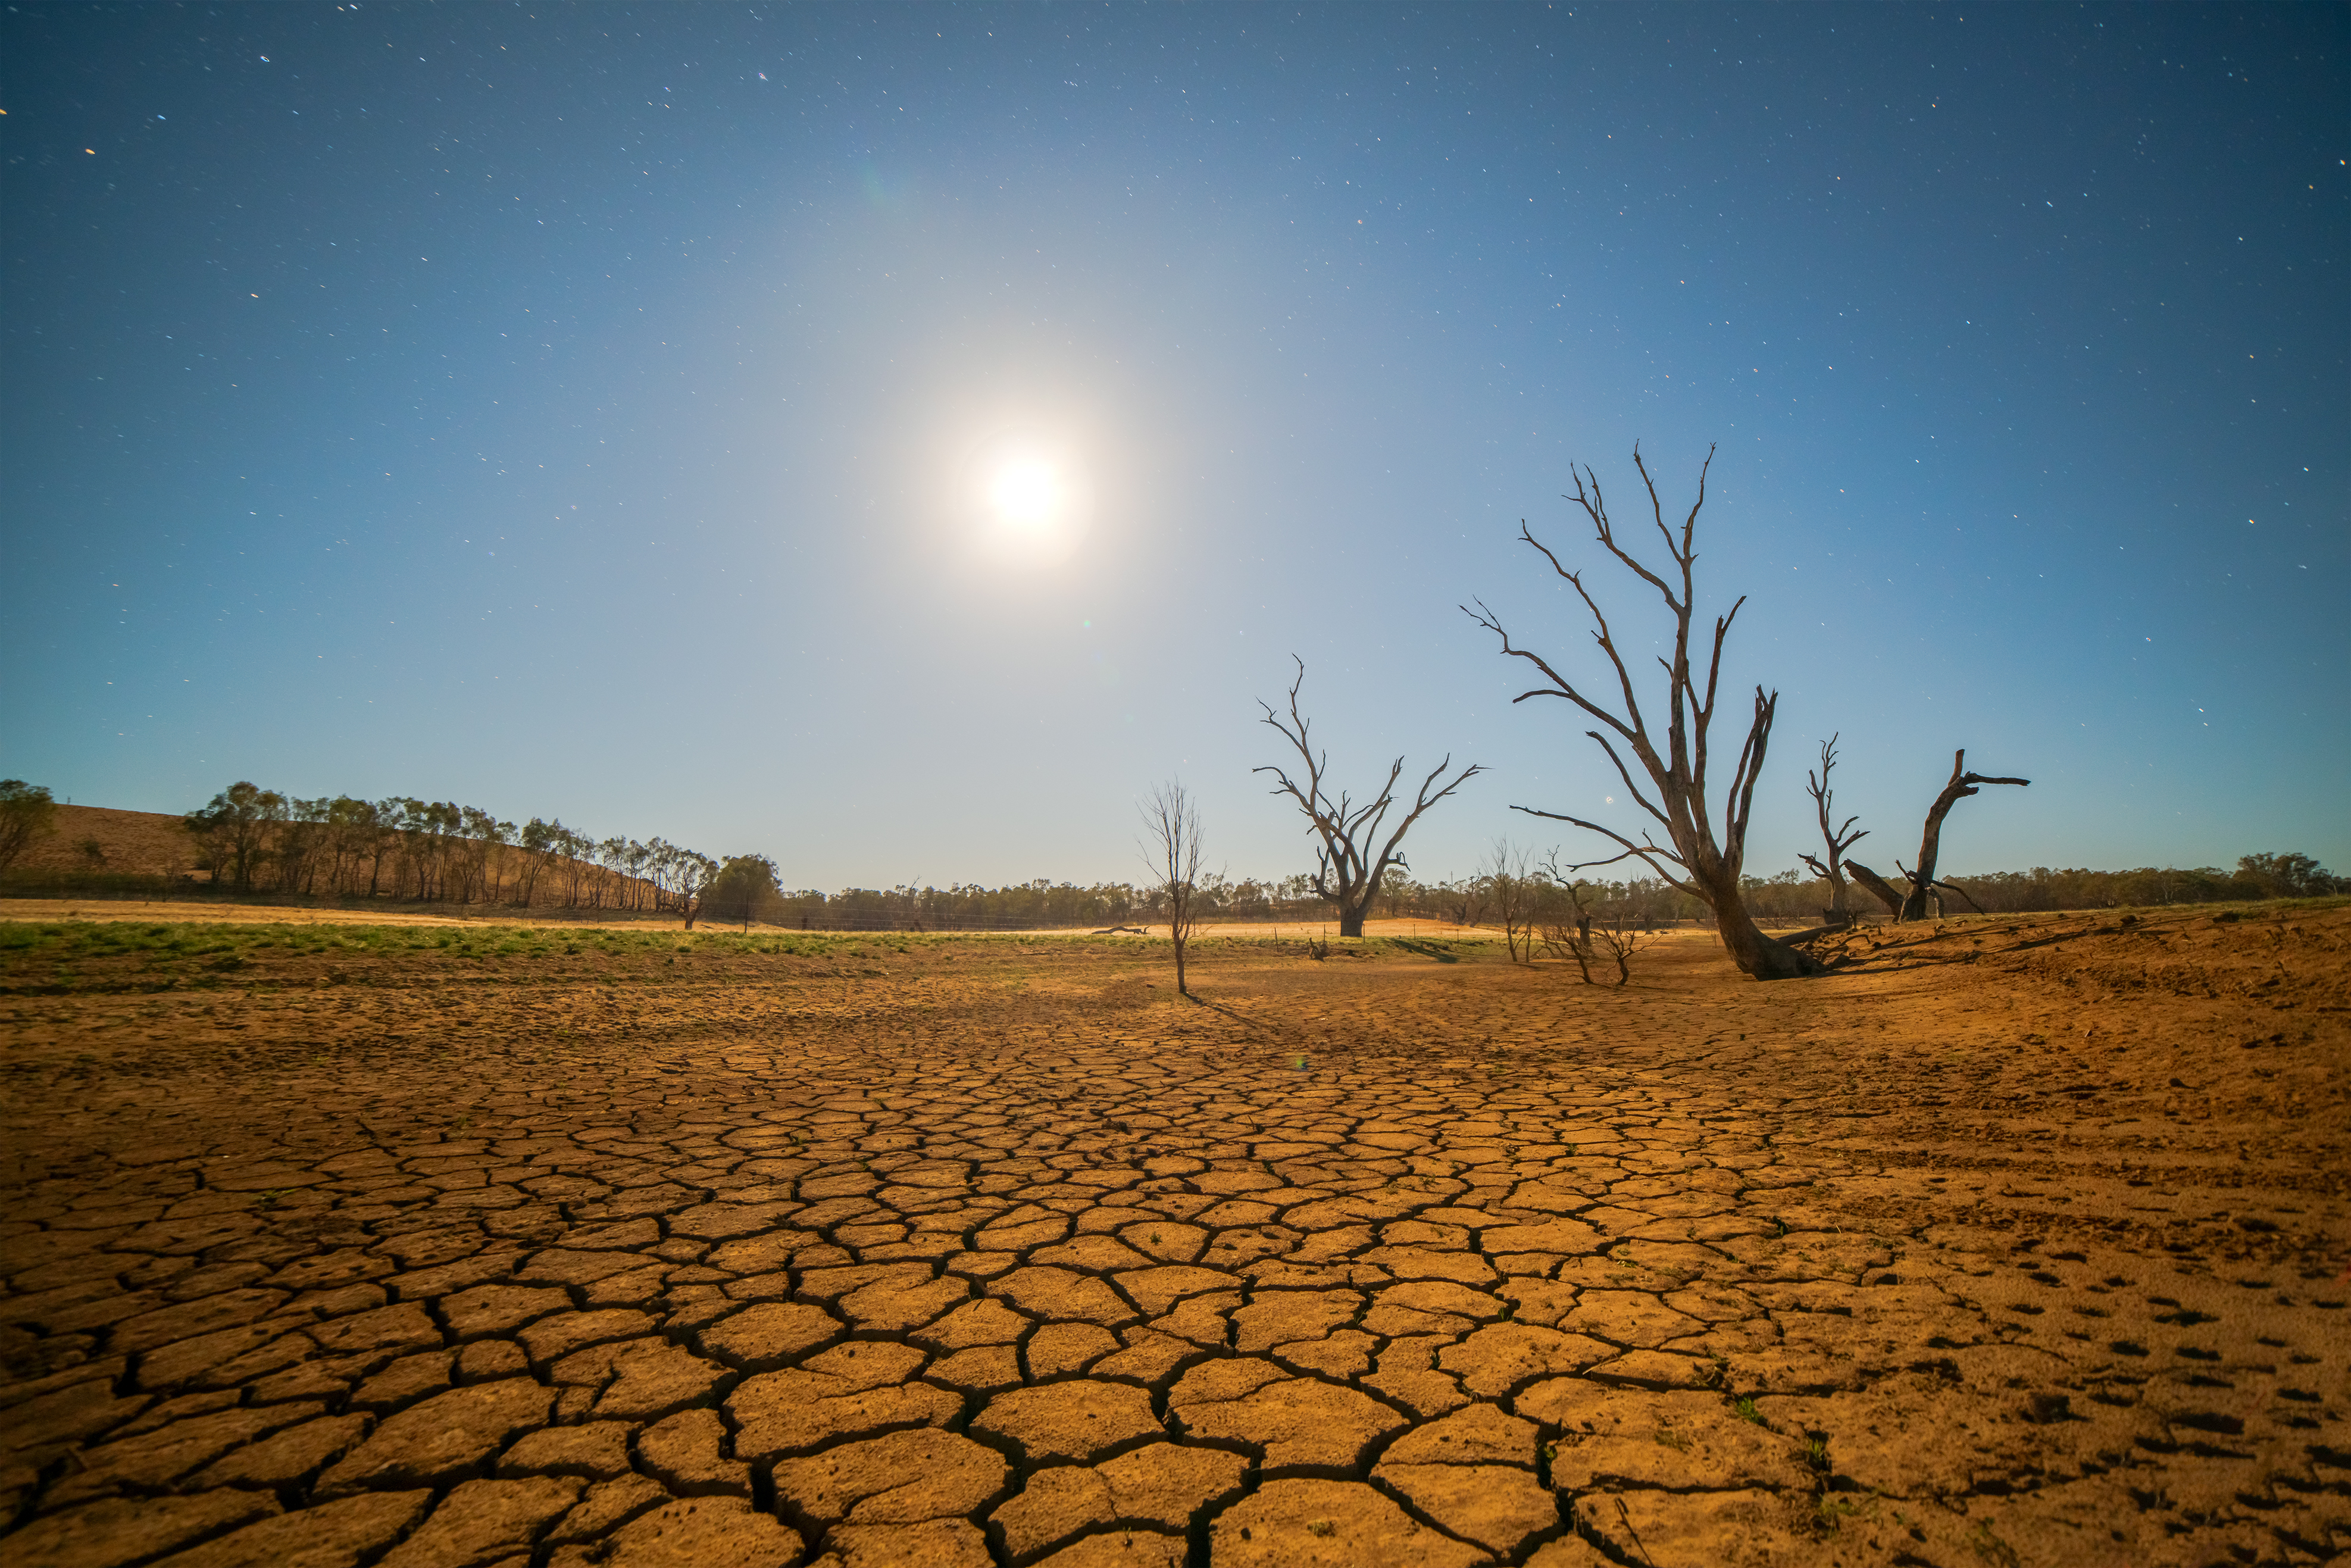 Drought in the desert